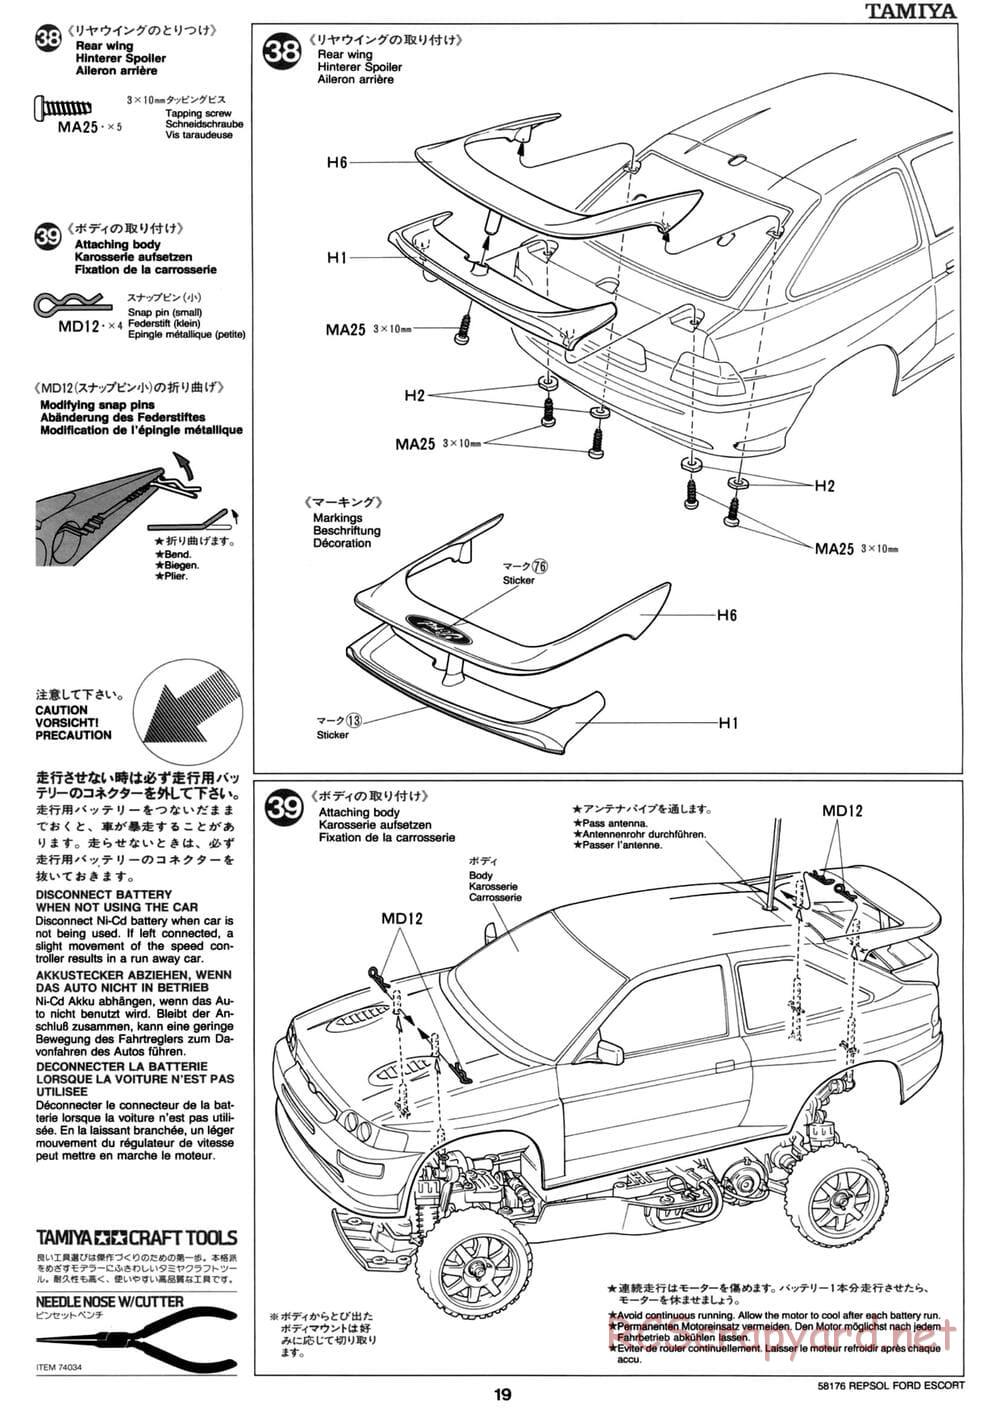 Tamiya - Repsol Ford Escort RS Cosworth - TA-02 Chassis - Manual - Page 19